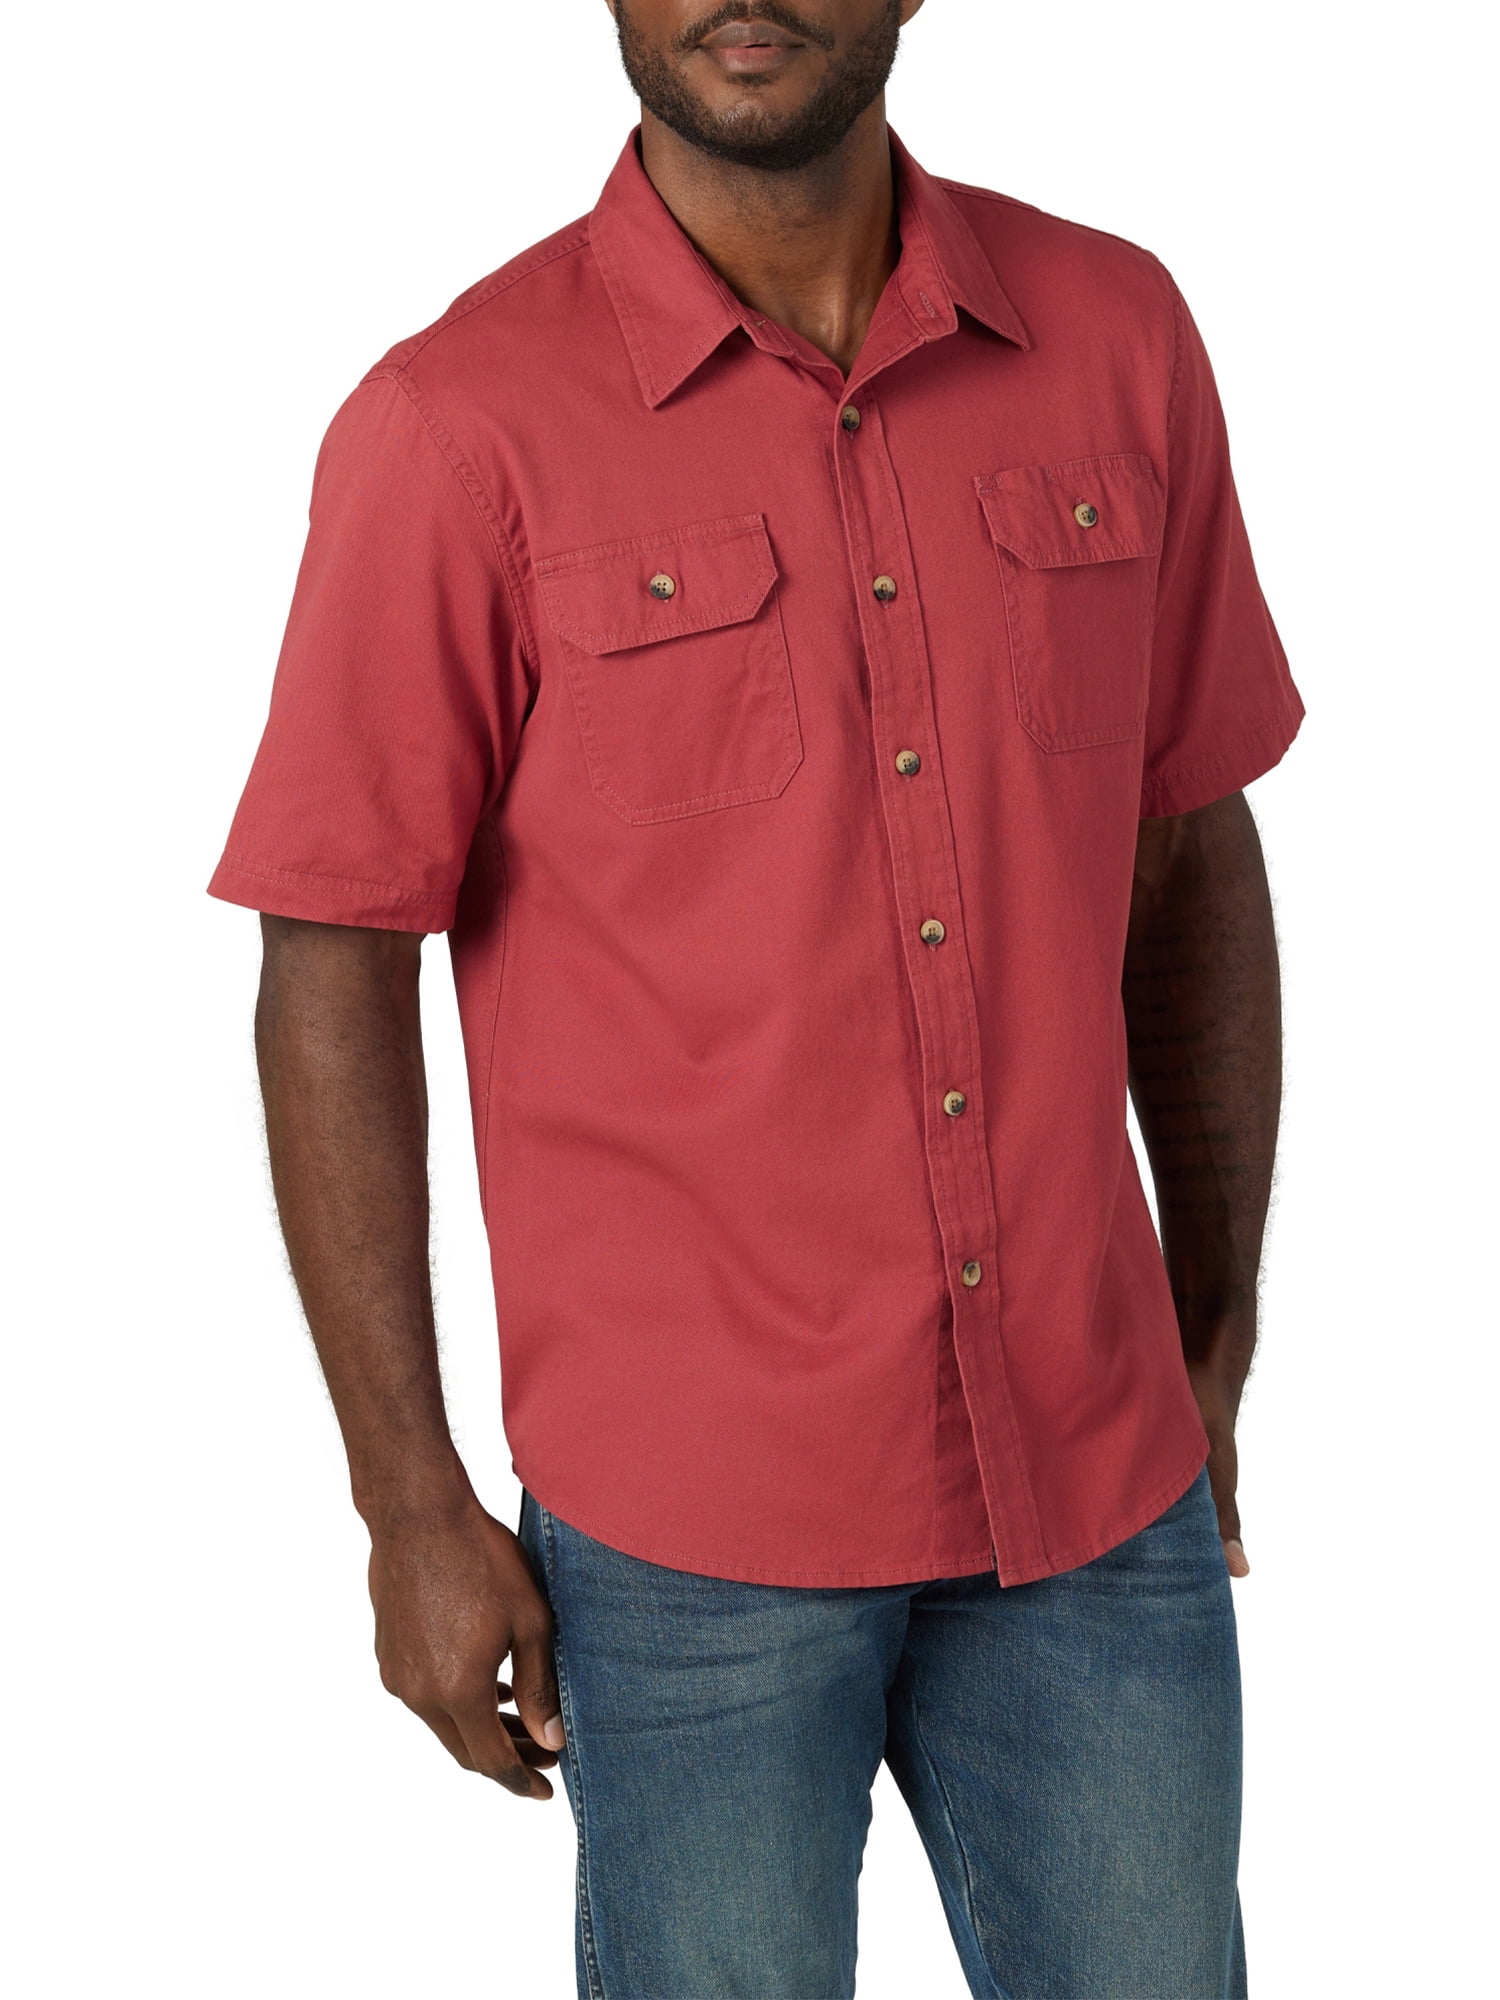 Wrangler Men's Short Sleeve Woven Shirts, Sizes S-5XL 